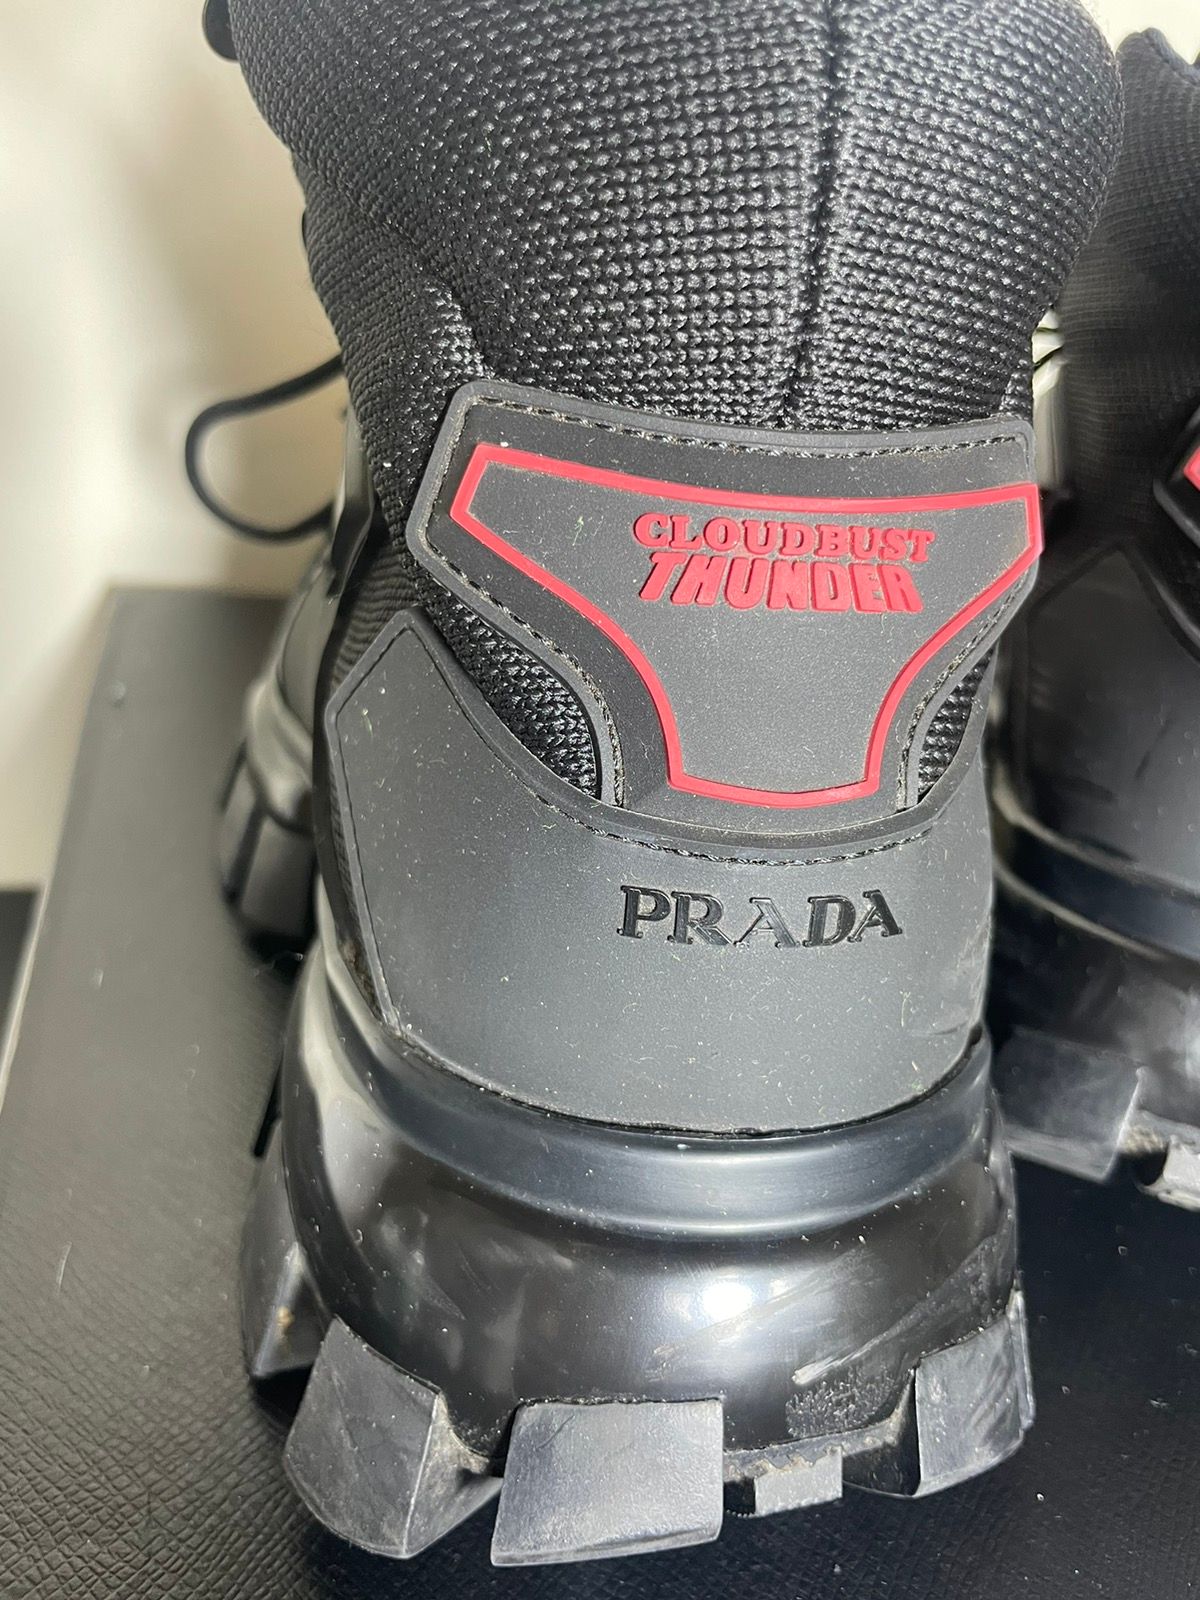 Prada Prada men cloudbust thunder lug-sole Size US 9 / EU 42 - 5 Thumbnail